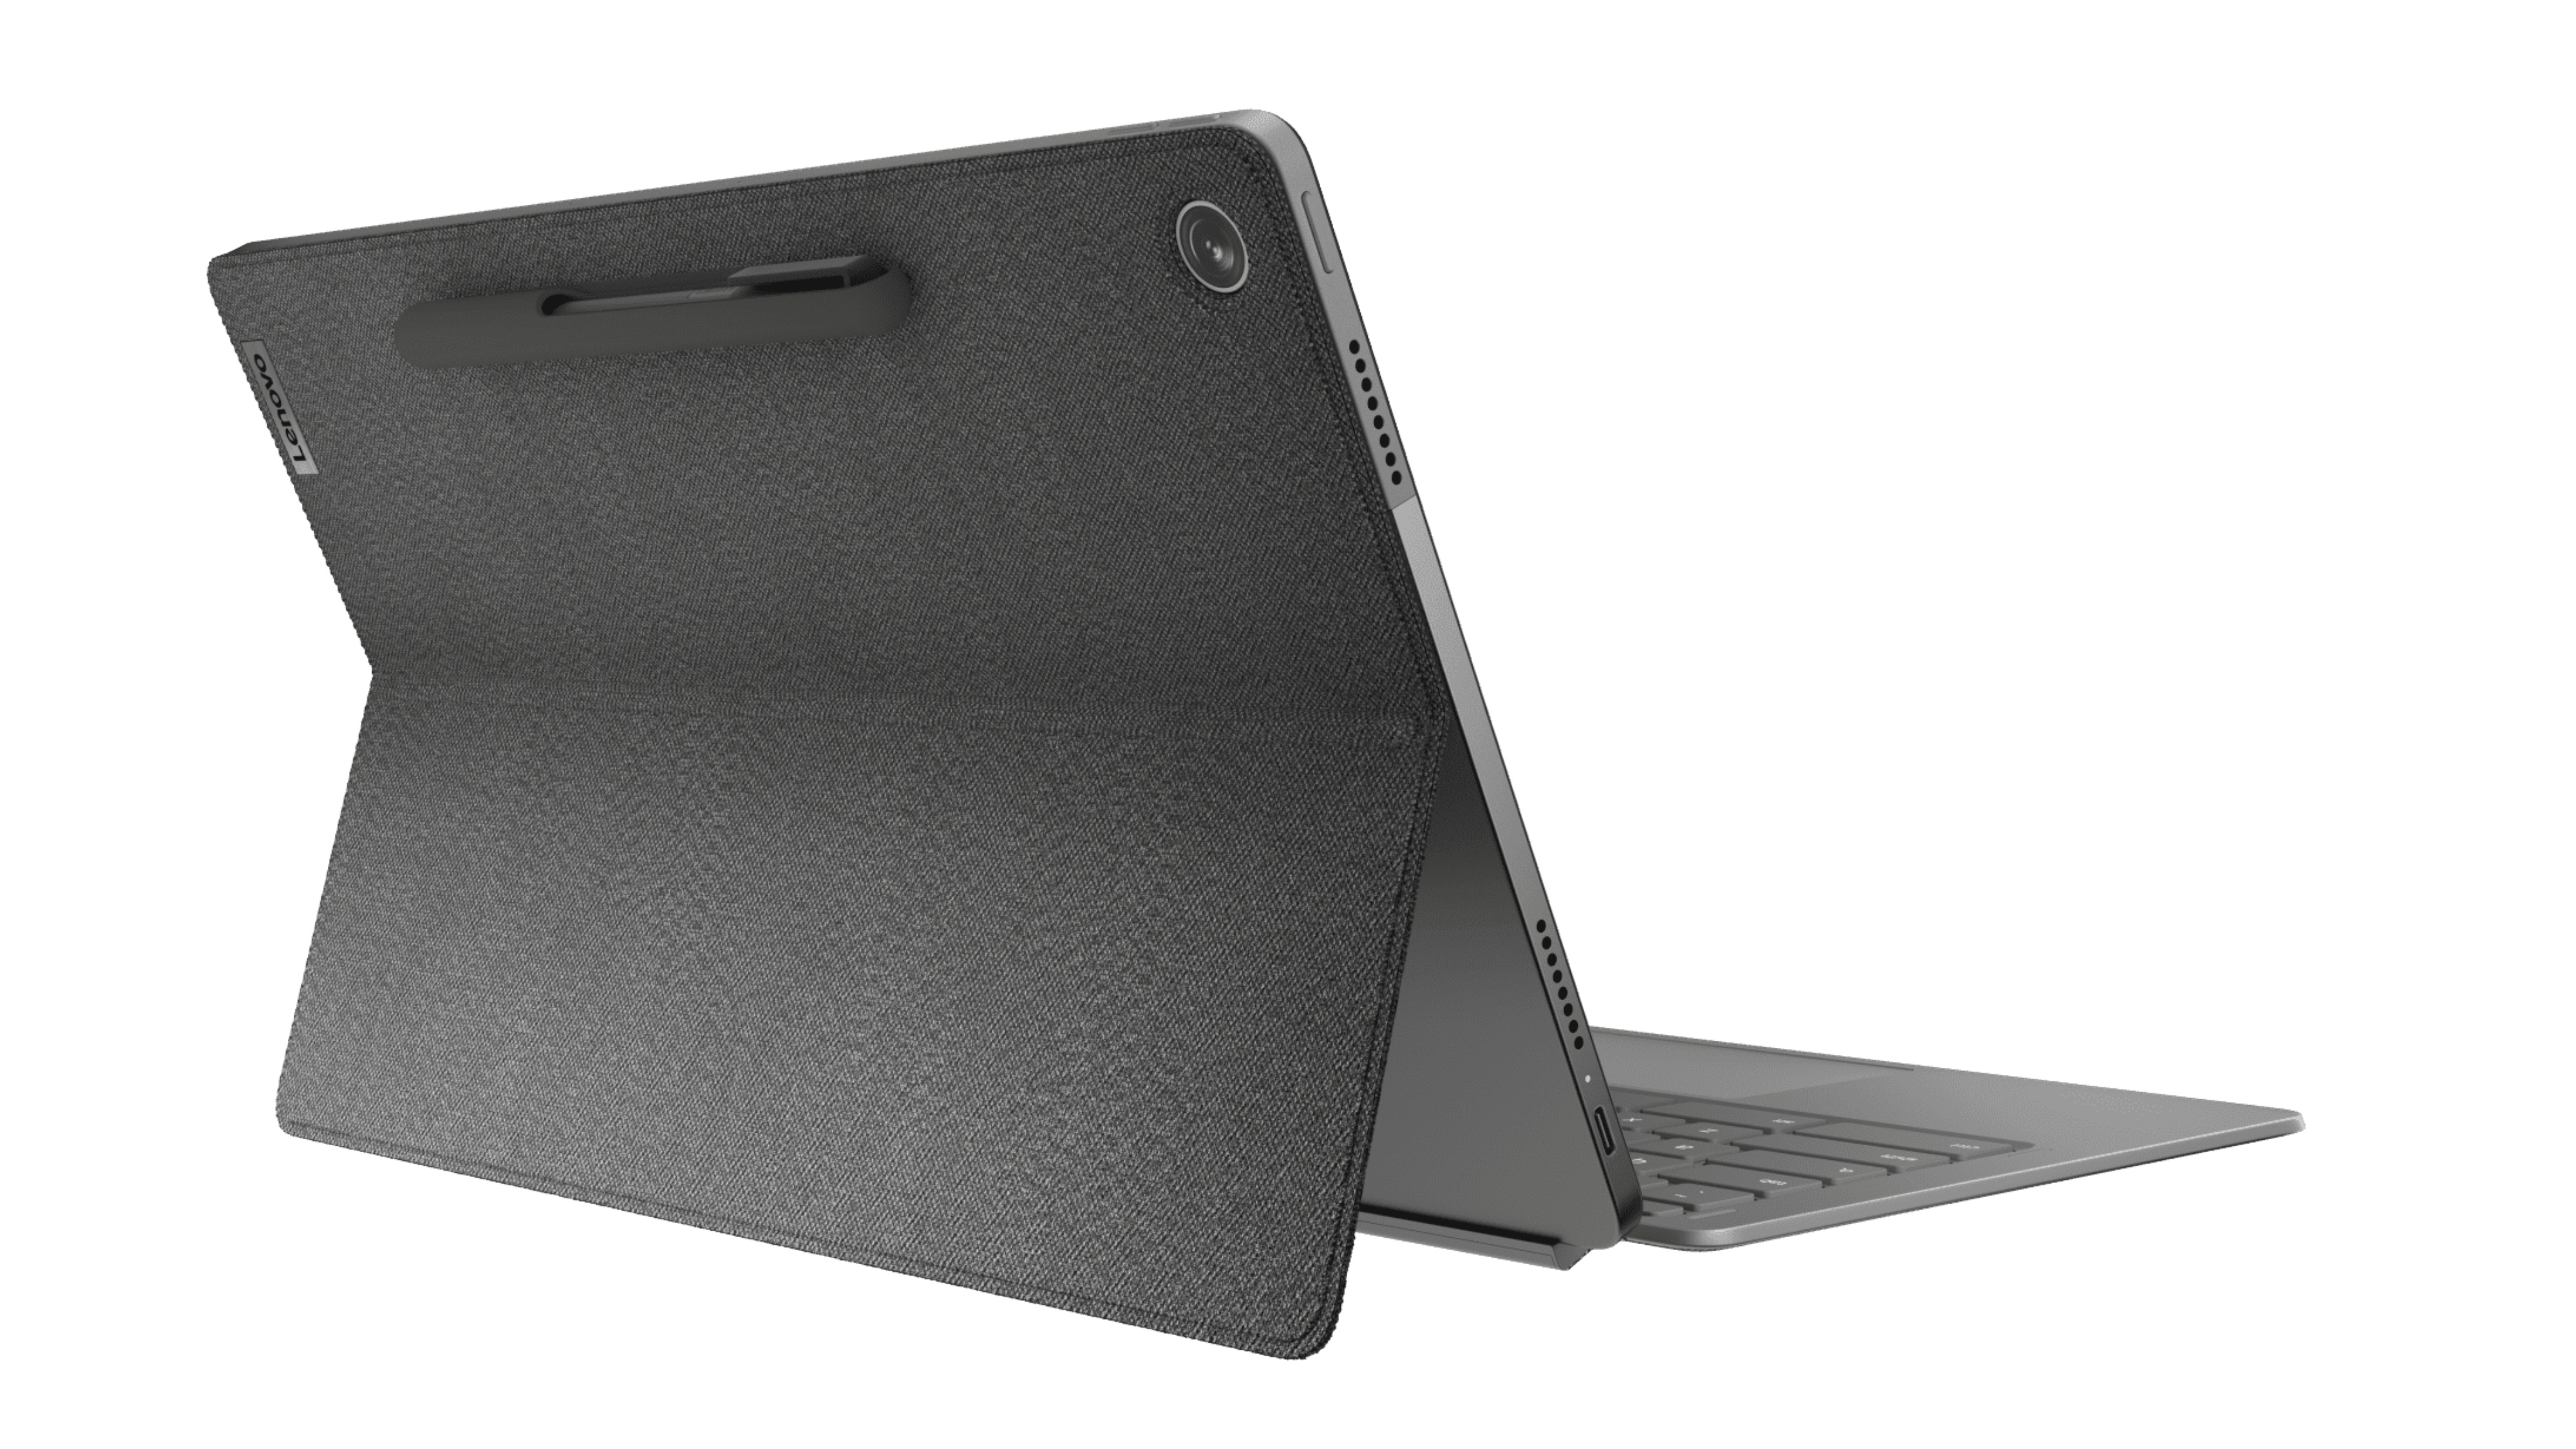 Lenovo IdeaPad Duet 5 Chromebook Featured C